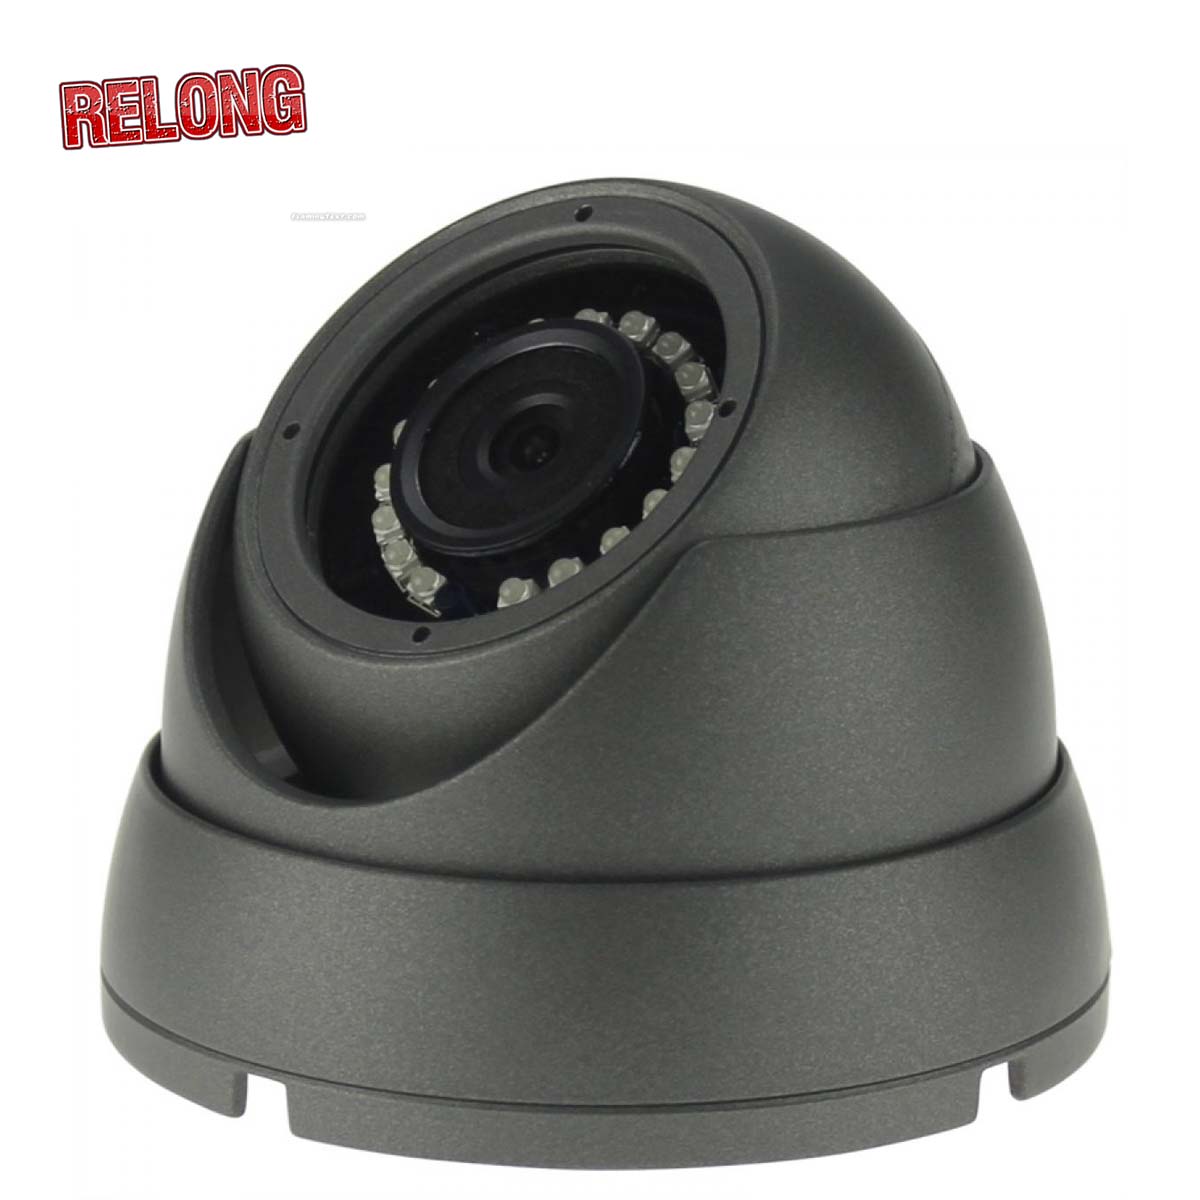 Vedio Camera Hd Dome Internal High Quality